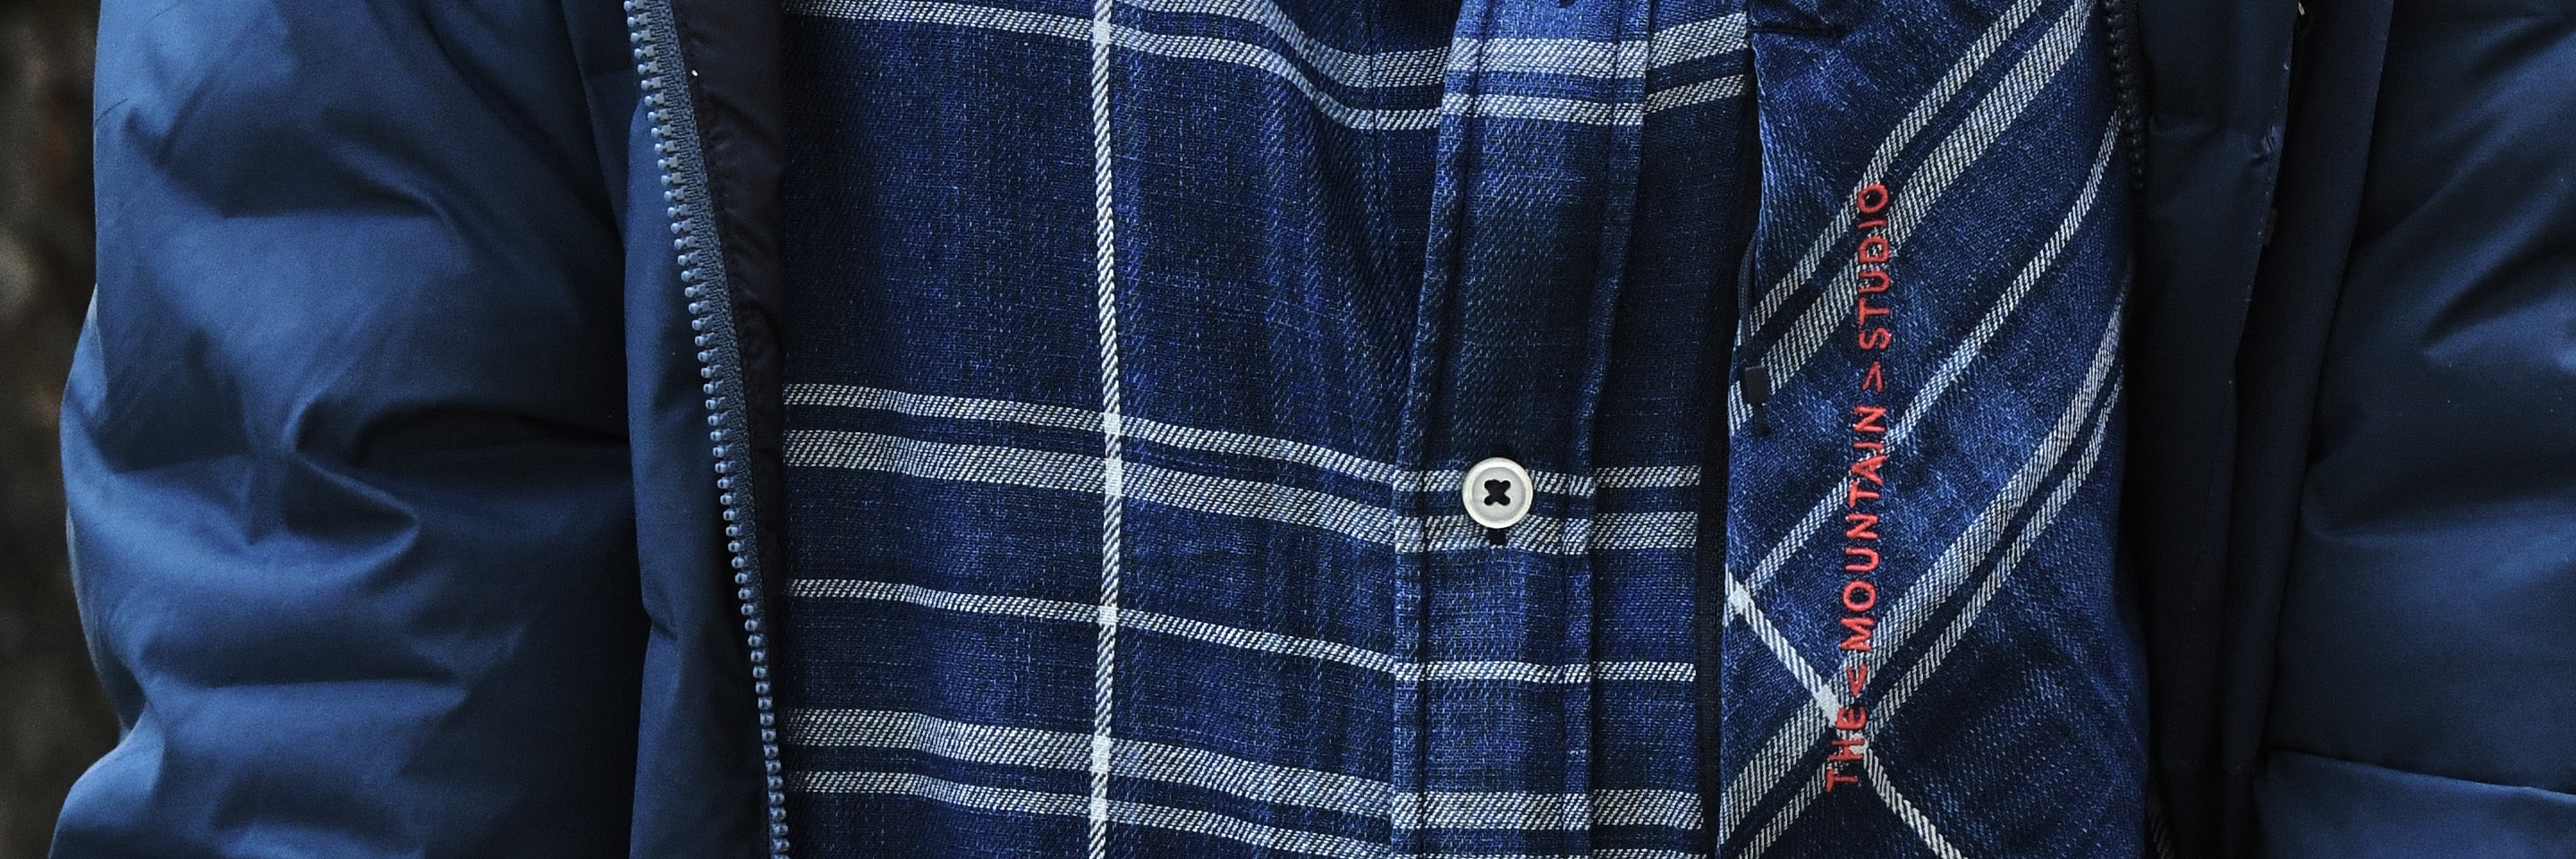 The Checkered Shirt